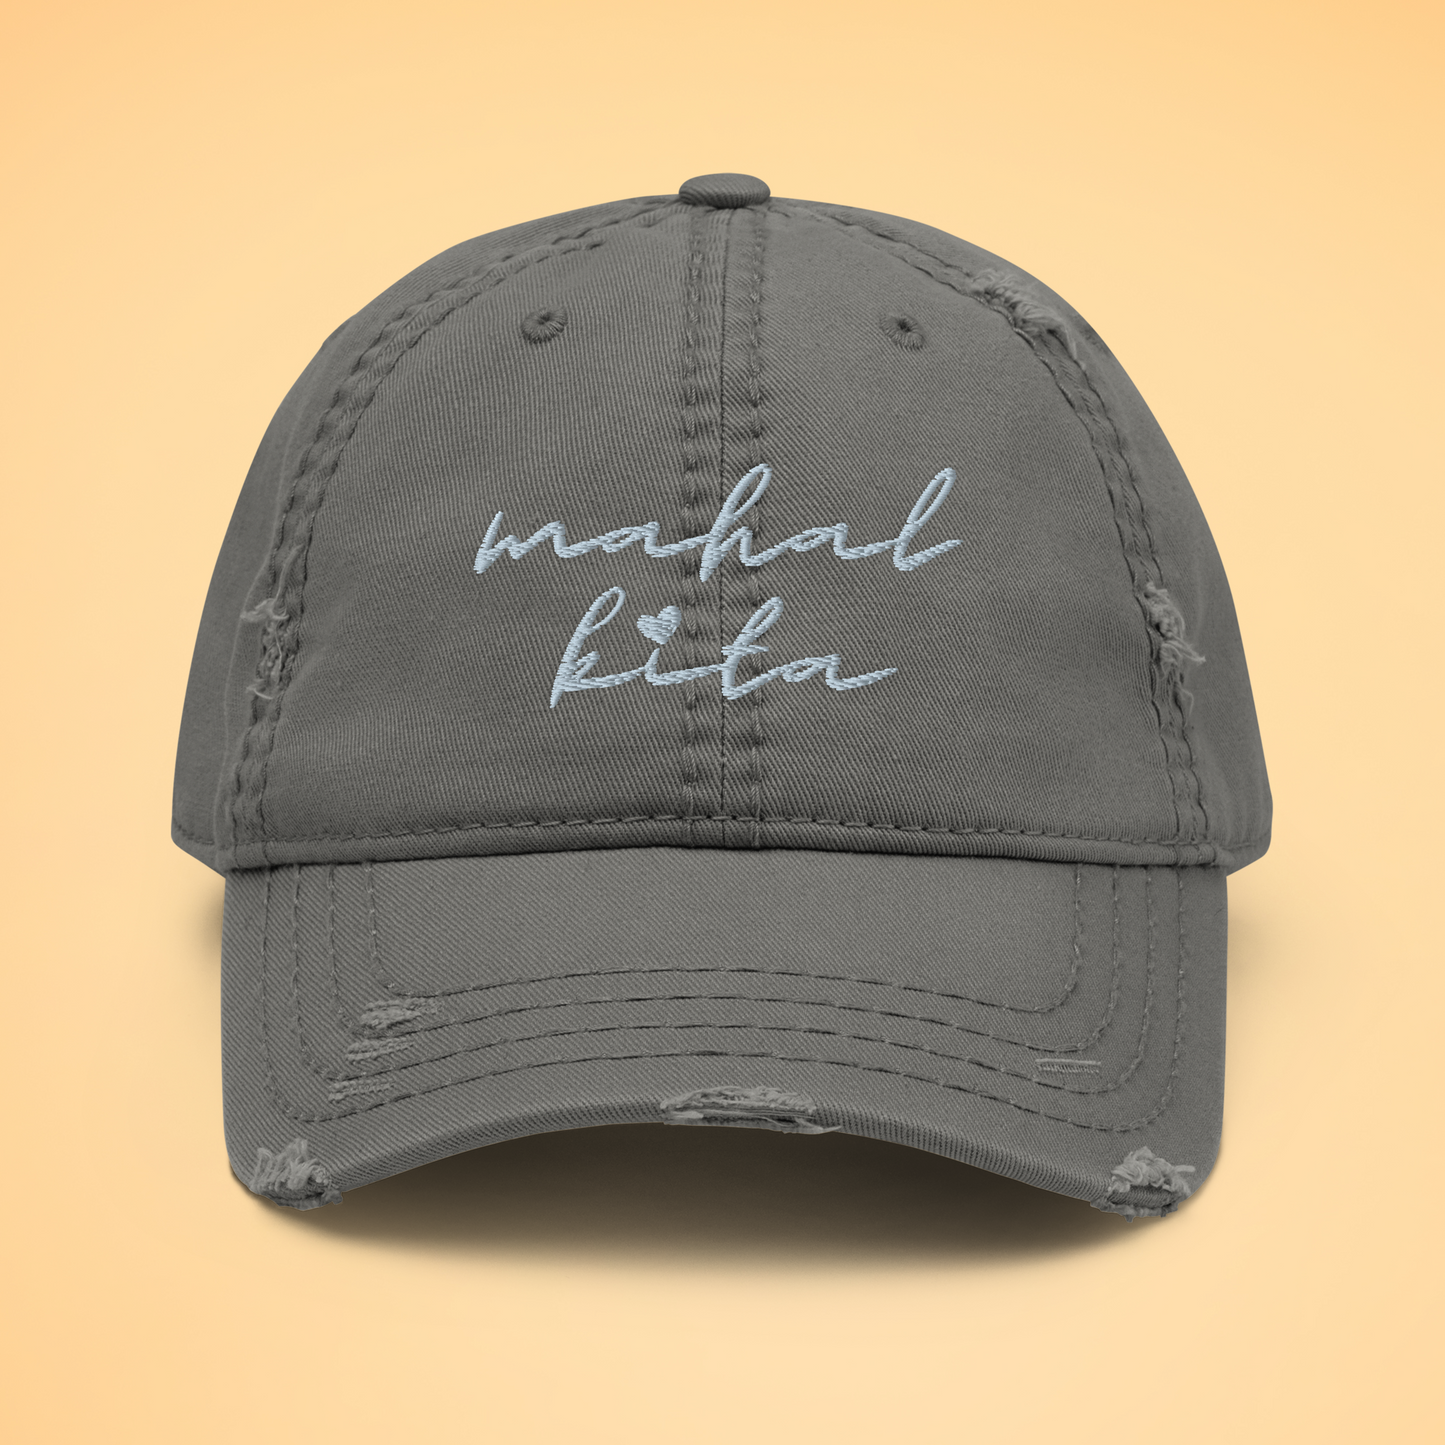 Mahal Kita Love You Filipino Language Embroidered Distressed Cap in Gray